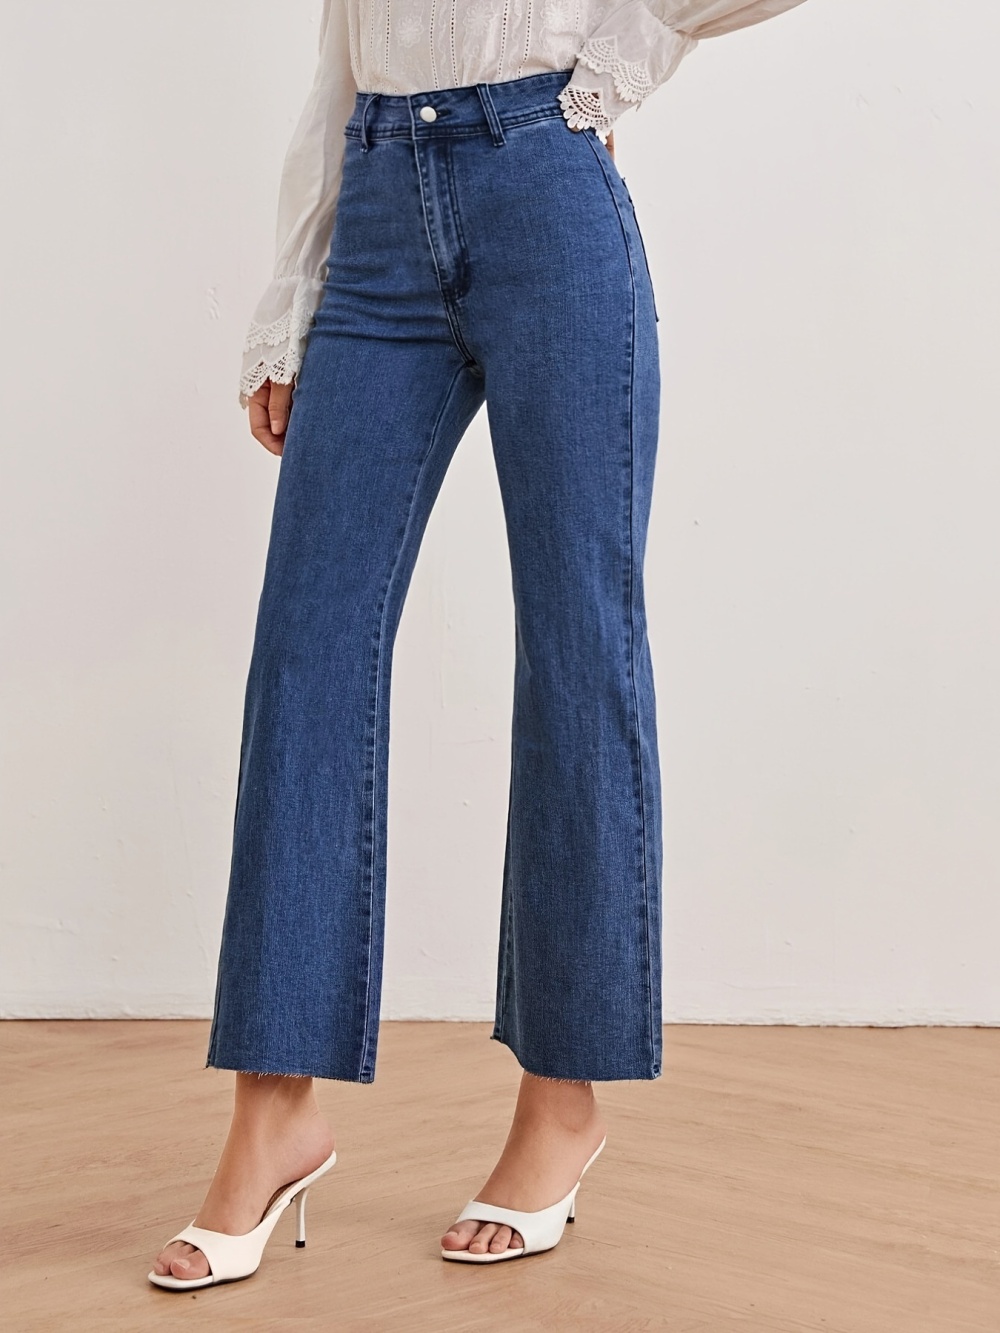 Pocket fashion pants pure jeans for women